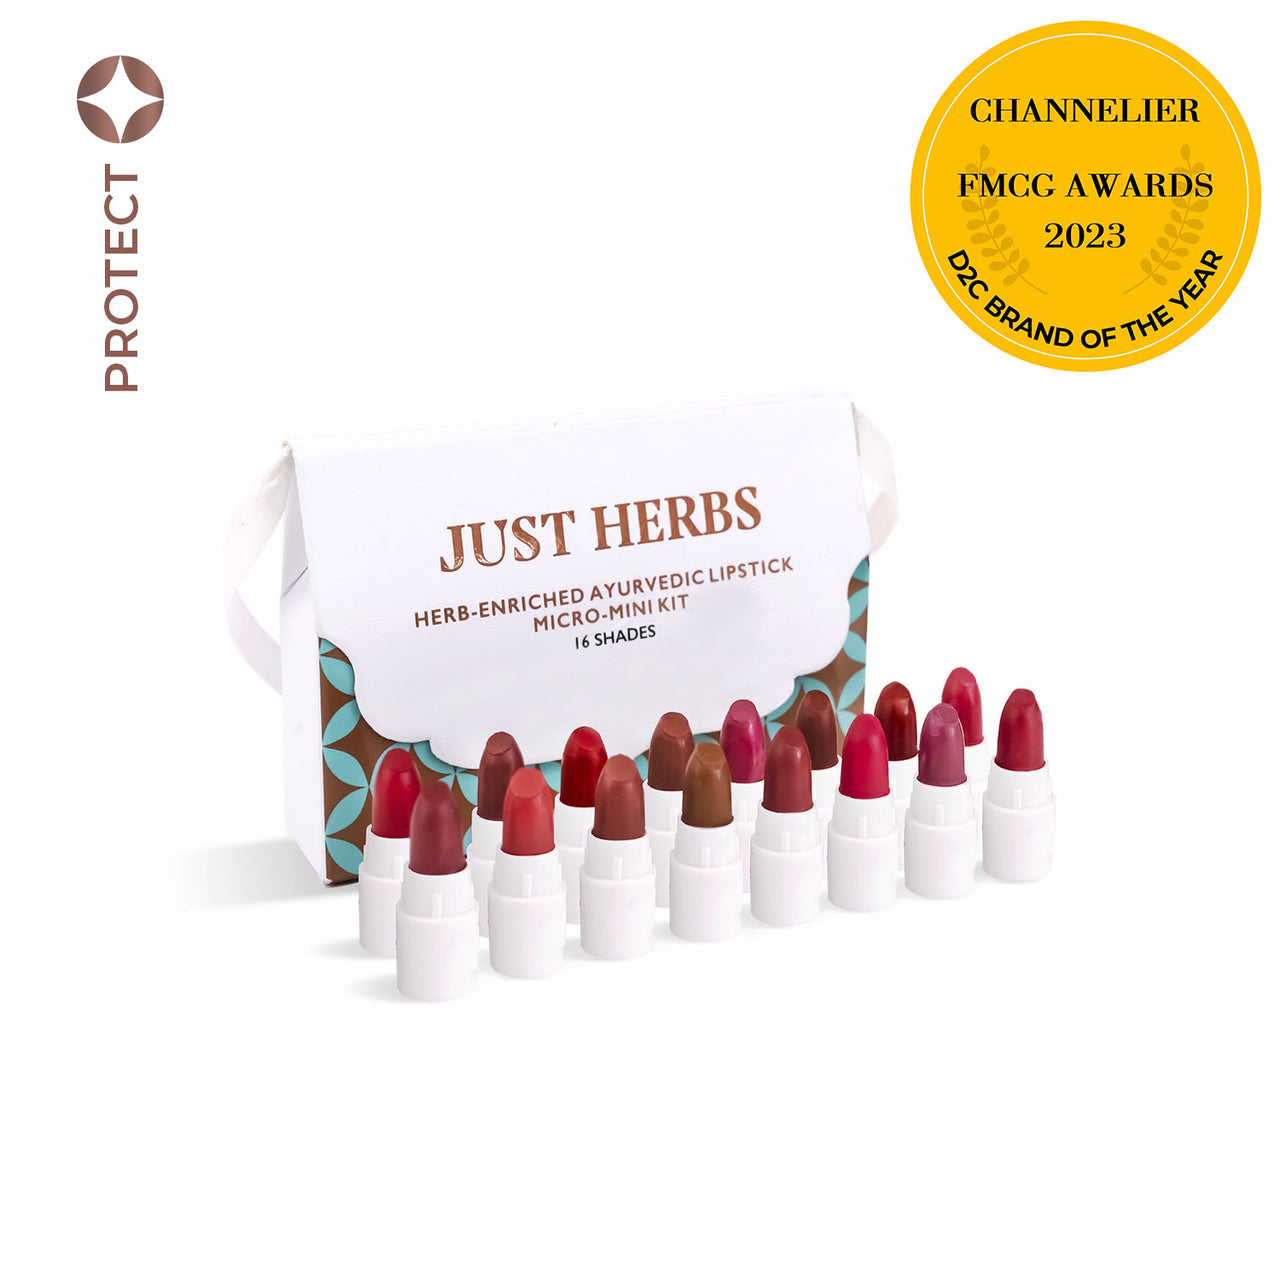 Herb Enriched Ayurvedic Lipstick Micro-Mini Kit 16 Shades